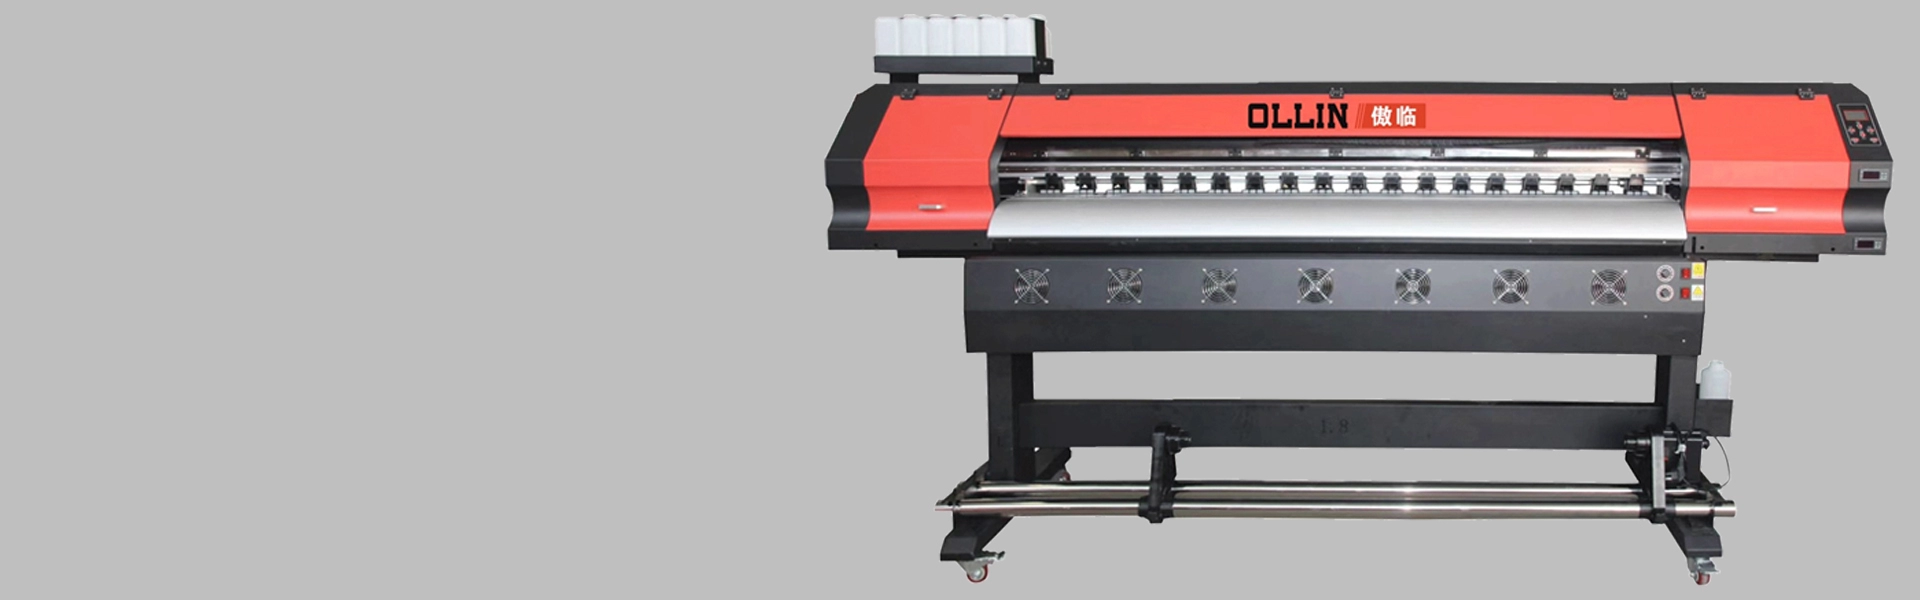 Mesin Printer Sublimasi 1.9m OL-190